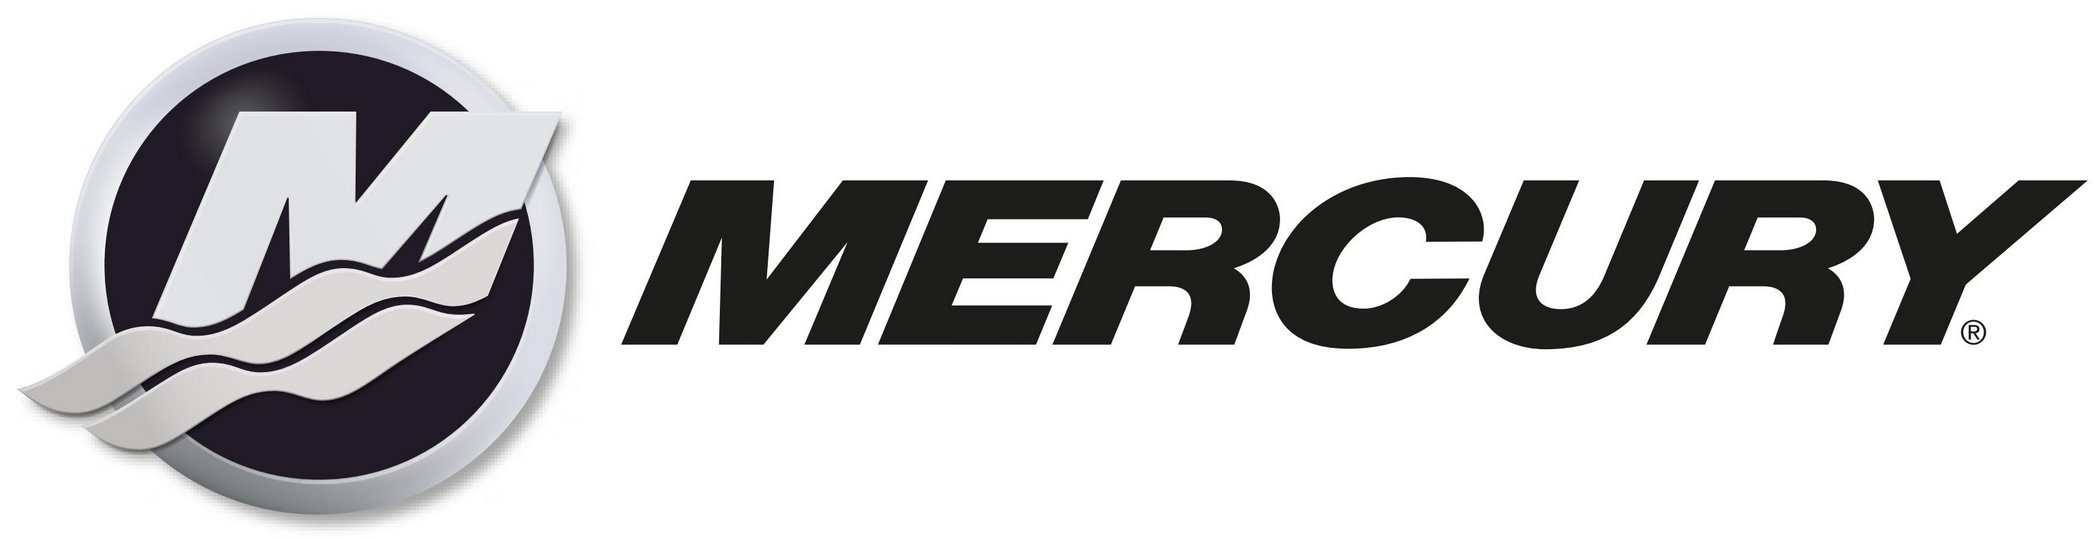 mercury-logo.jpg